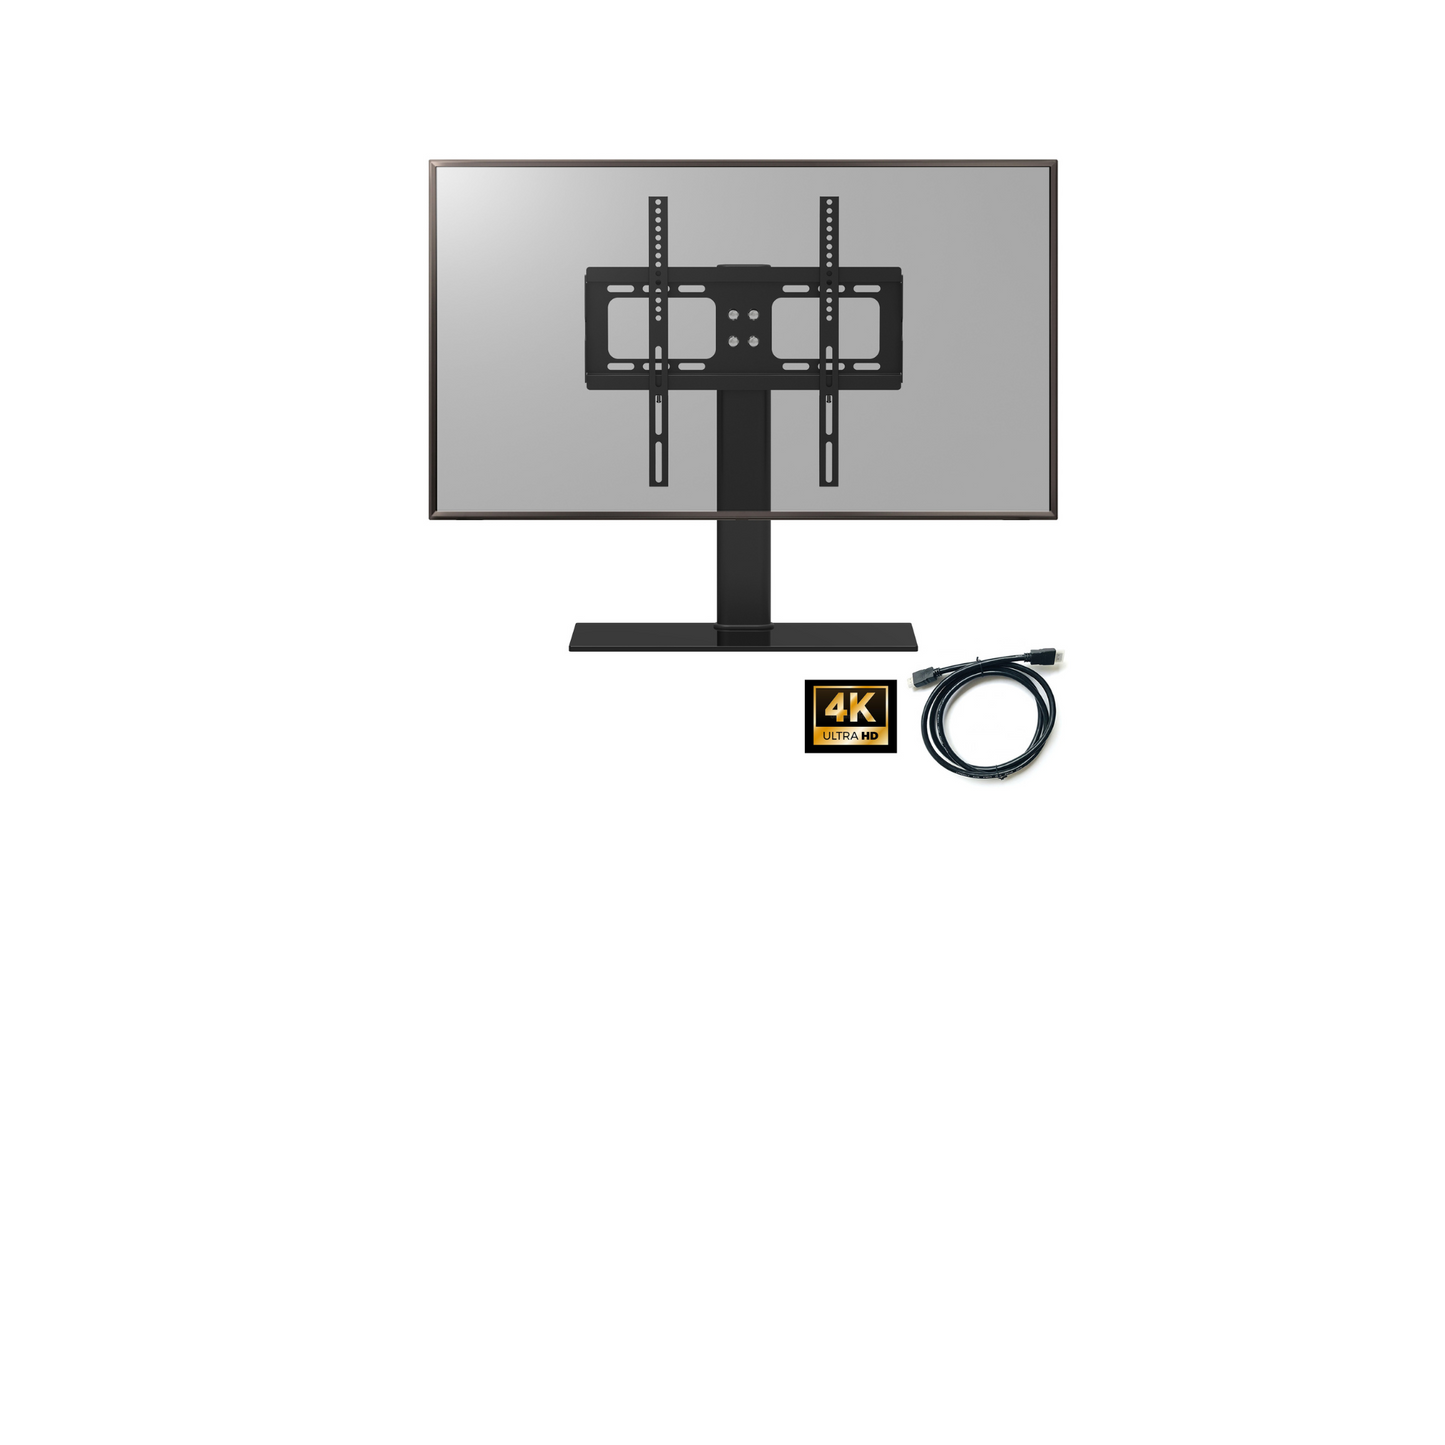 PALMAT Universeel tafelmodel tv-standaard met beugel 32-50 inch VERSA 400 x 400